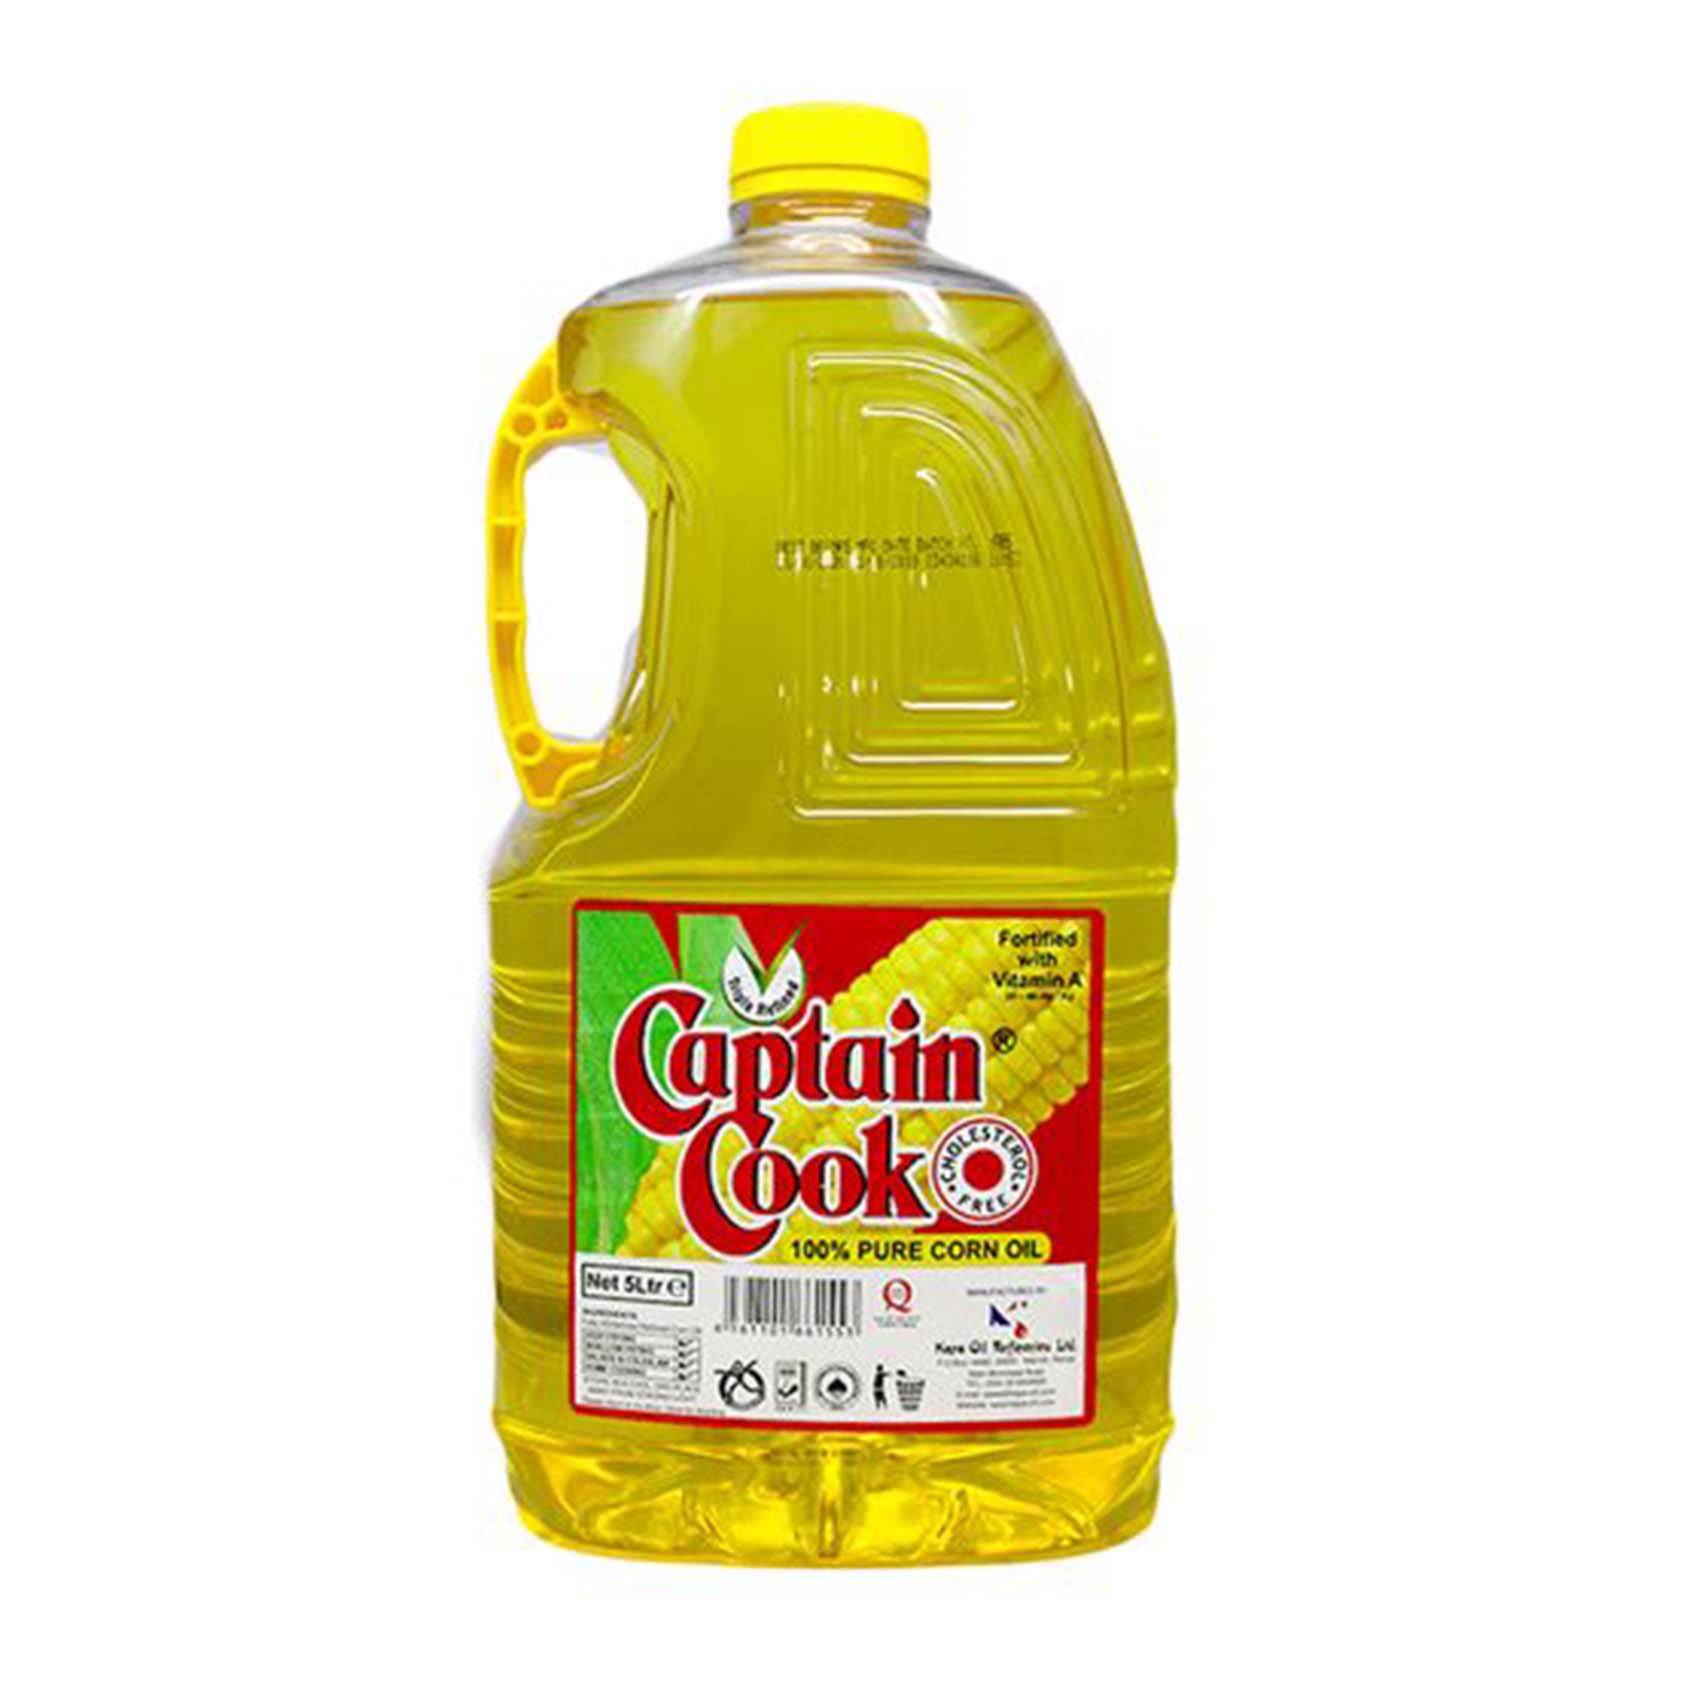 Captain Cook Pure Corn Oil 5L